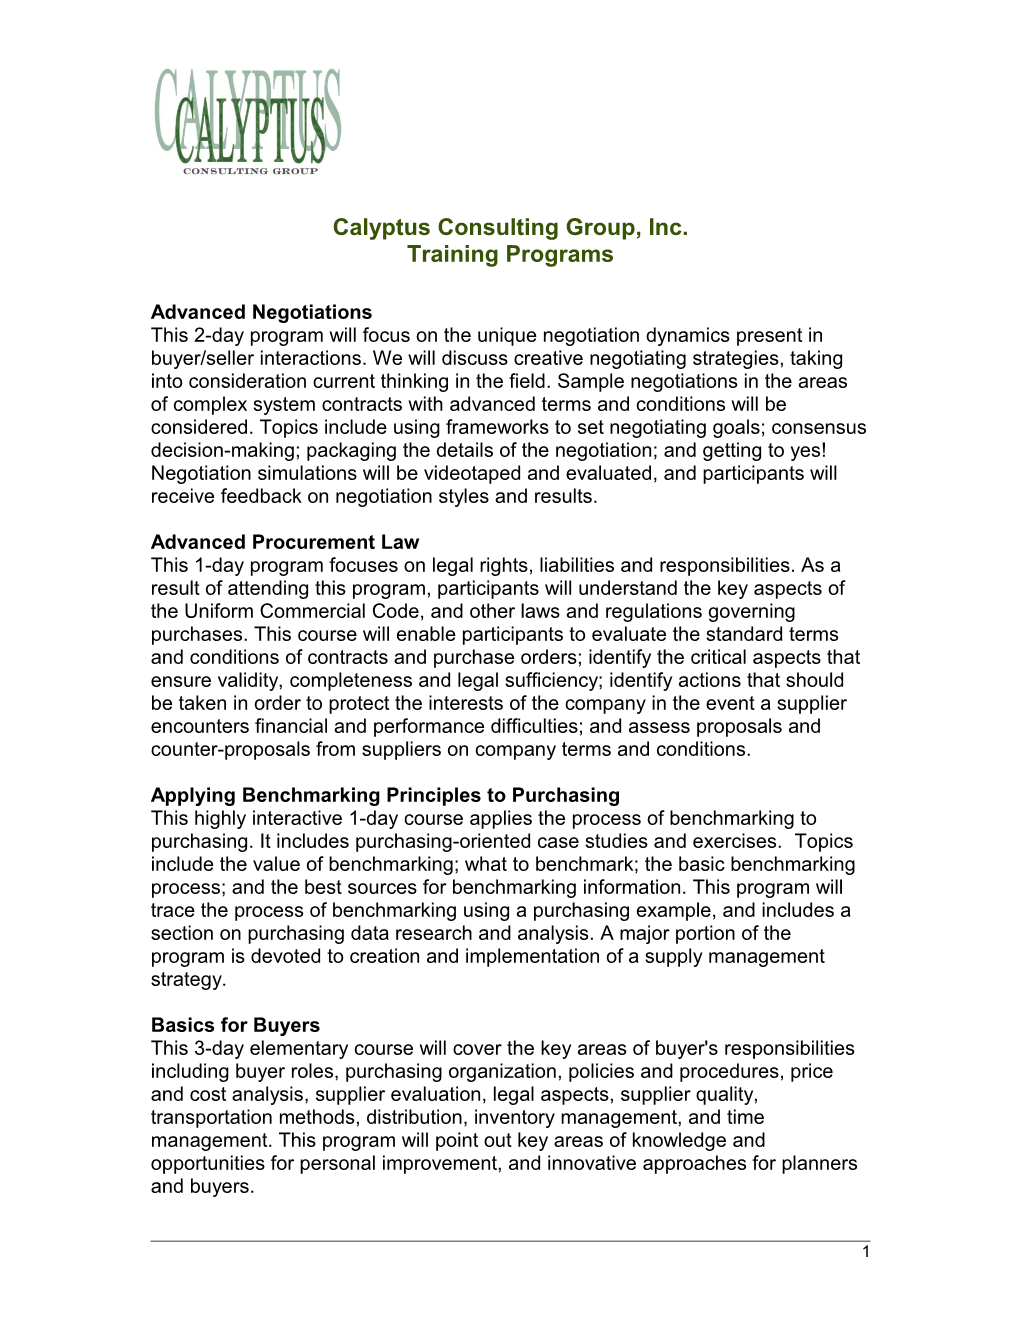 Calyptus Consulting Group, Inc. Training Programs